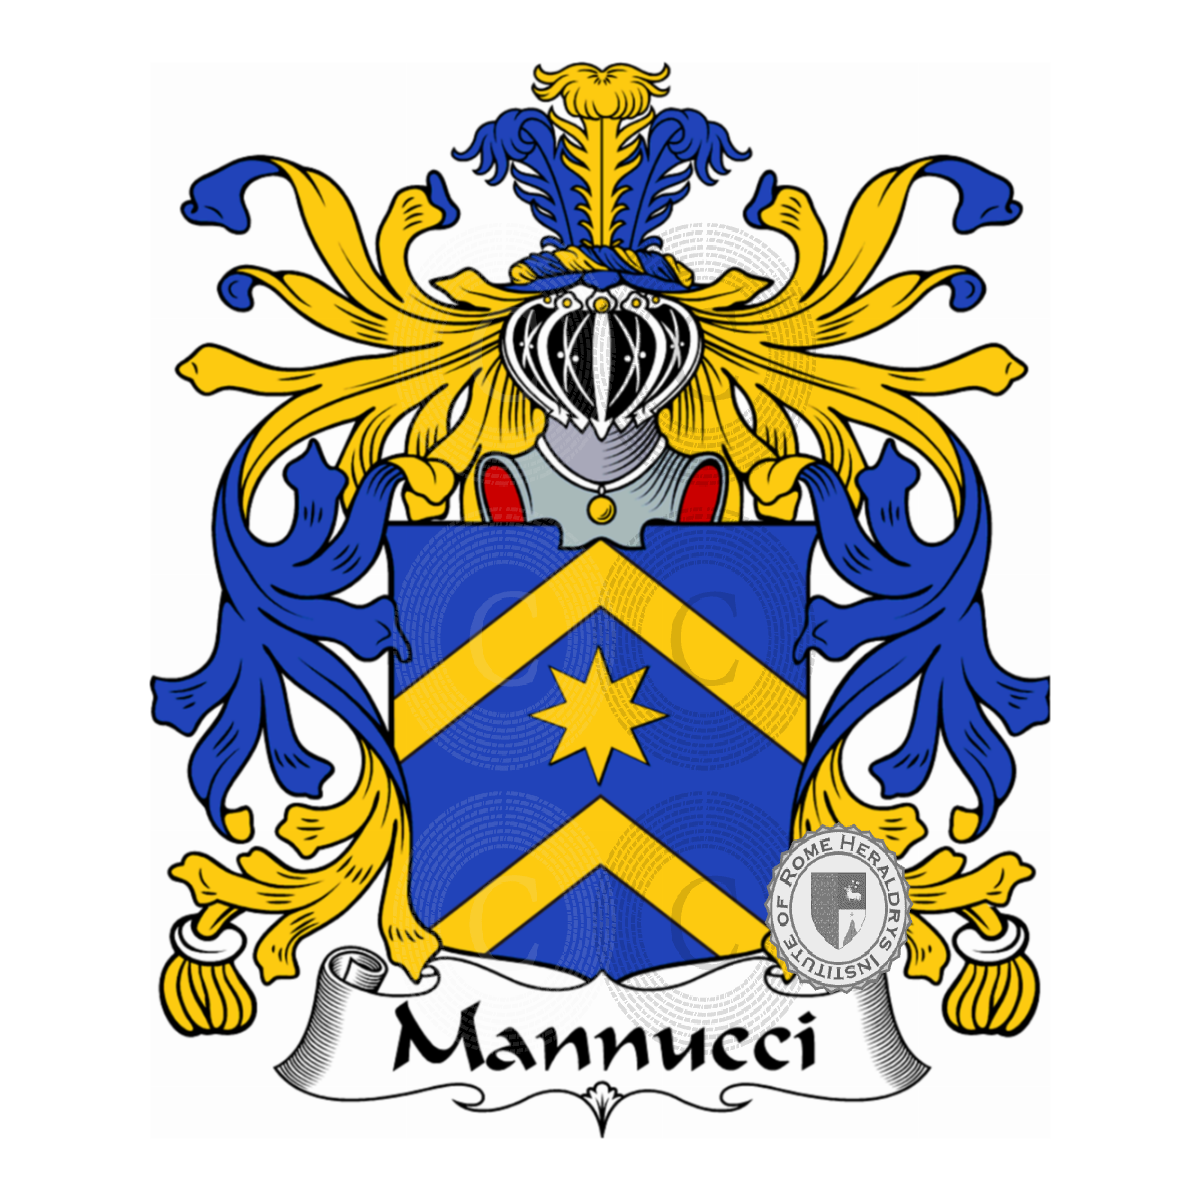 Brasão da famíliaMannucci, Mannucci Benincasa,Mannucci de' Cori,Mannucci del Lion Rosso,Mannucci delle Stelle